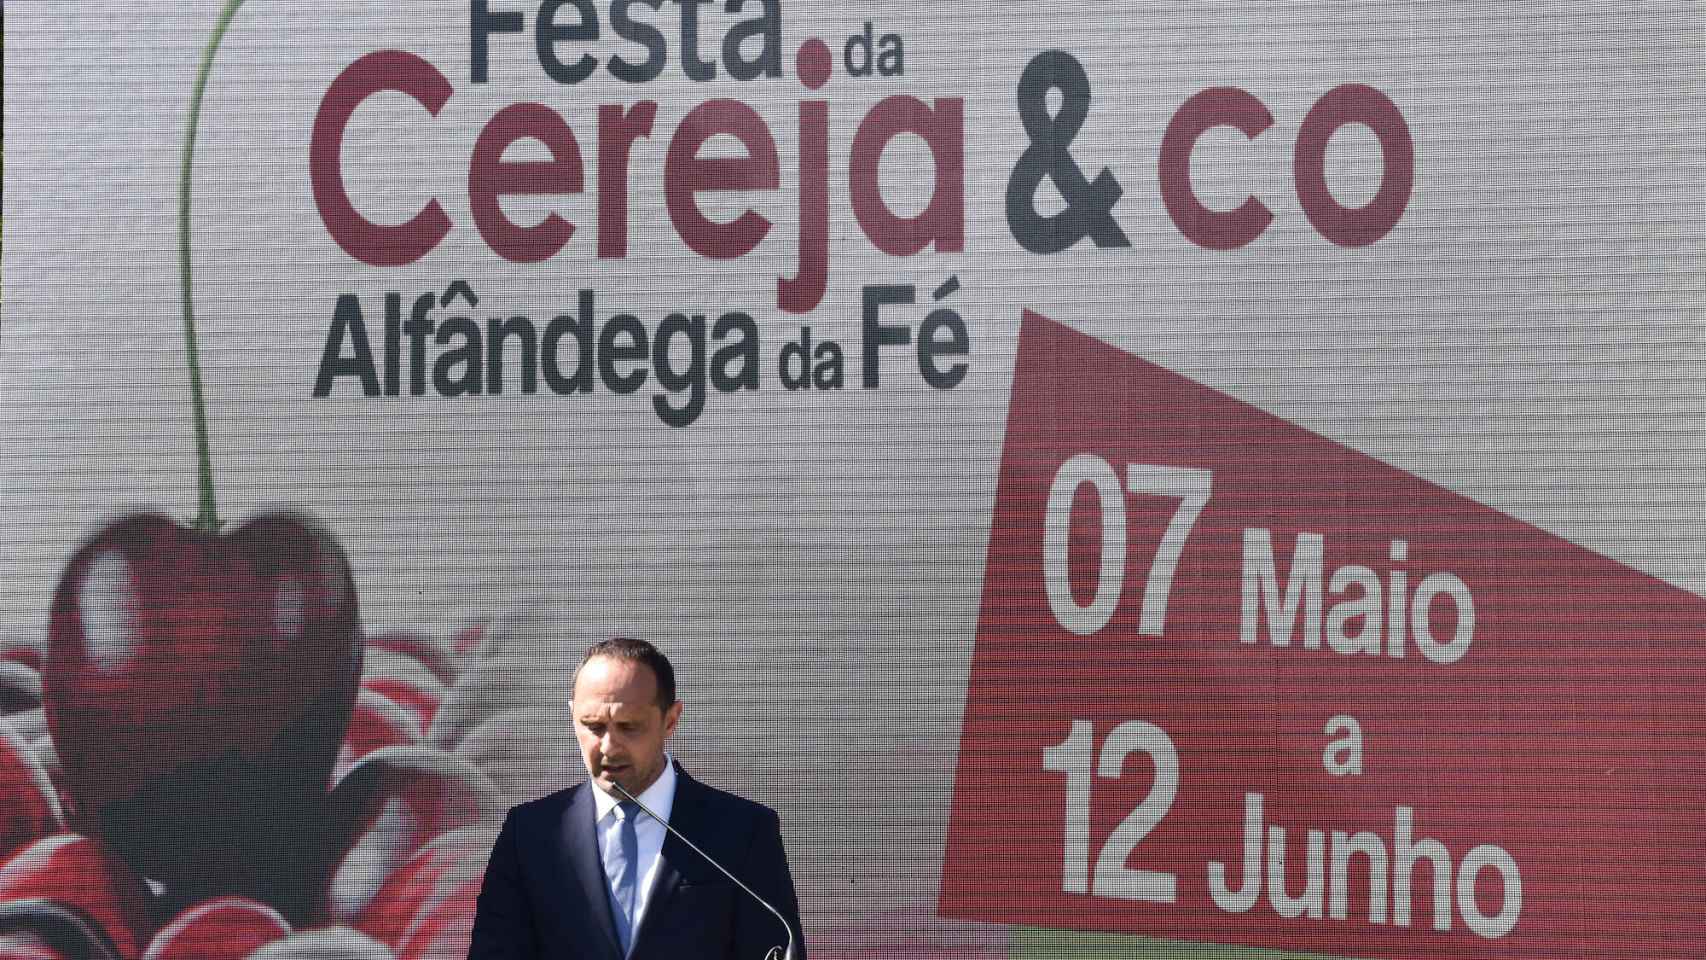 Imágenes de la Feria de la Cereza de Alfândega da Fè (Portugal) 2022